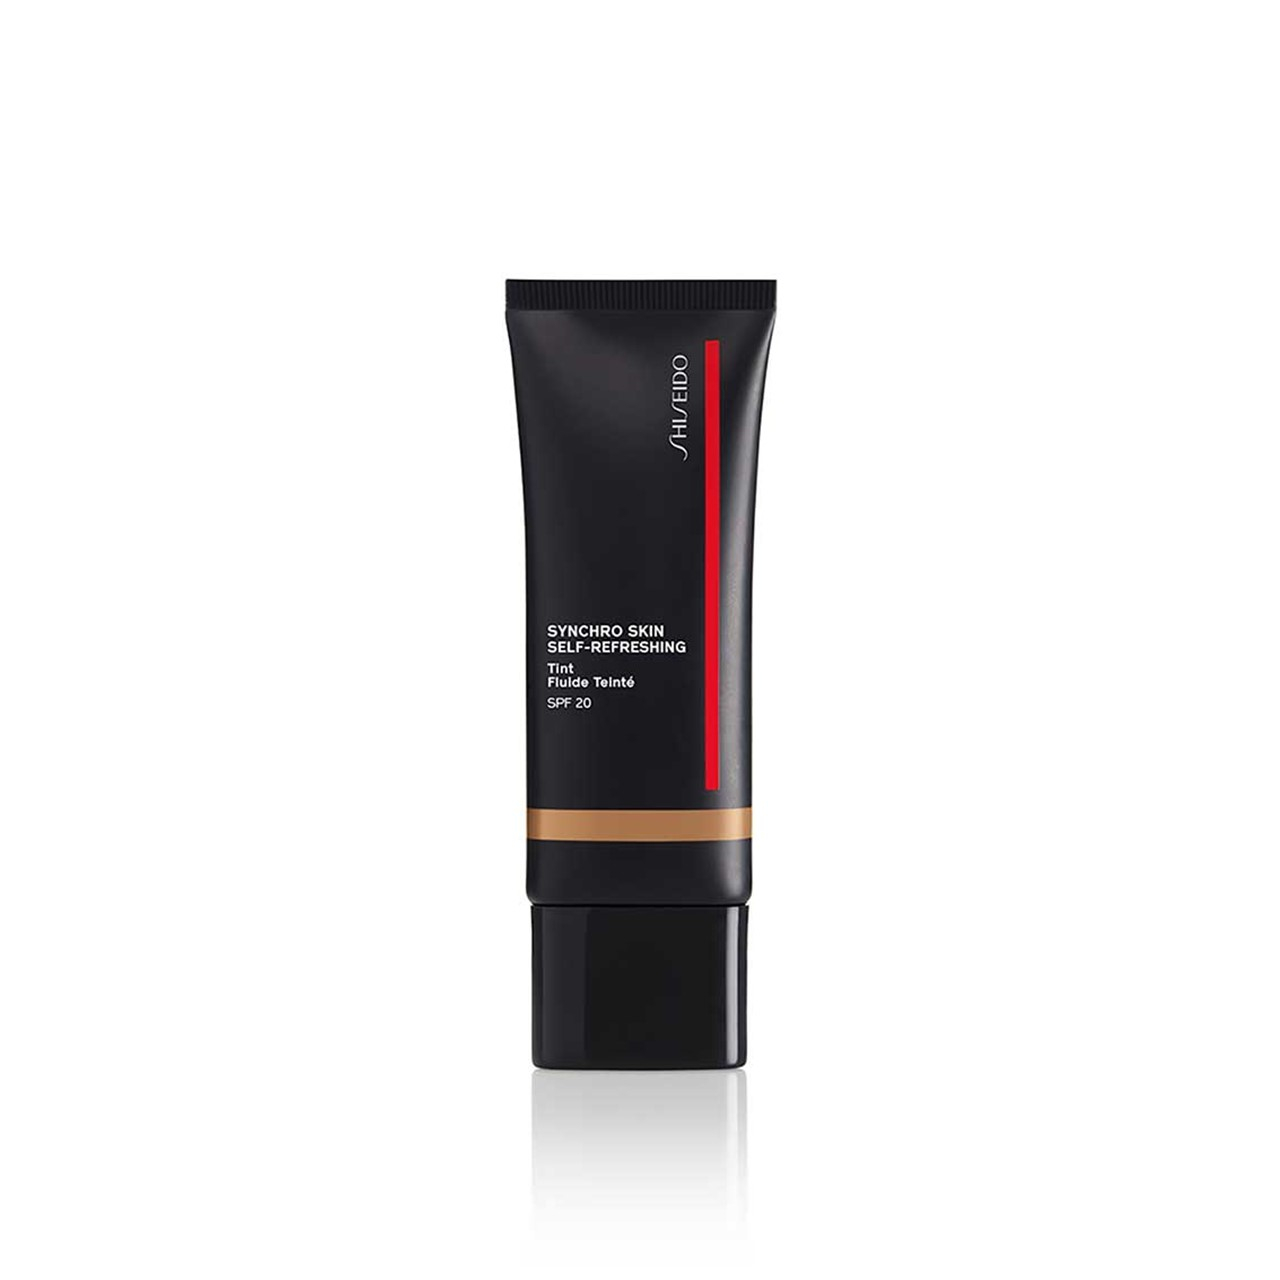 Shiseido Synchro Skin Self-Refreshing Tint SPF20 335 Medium Katsura 30ml (1.01fl oz)